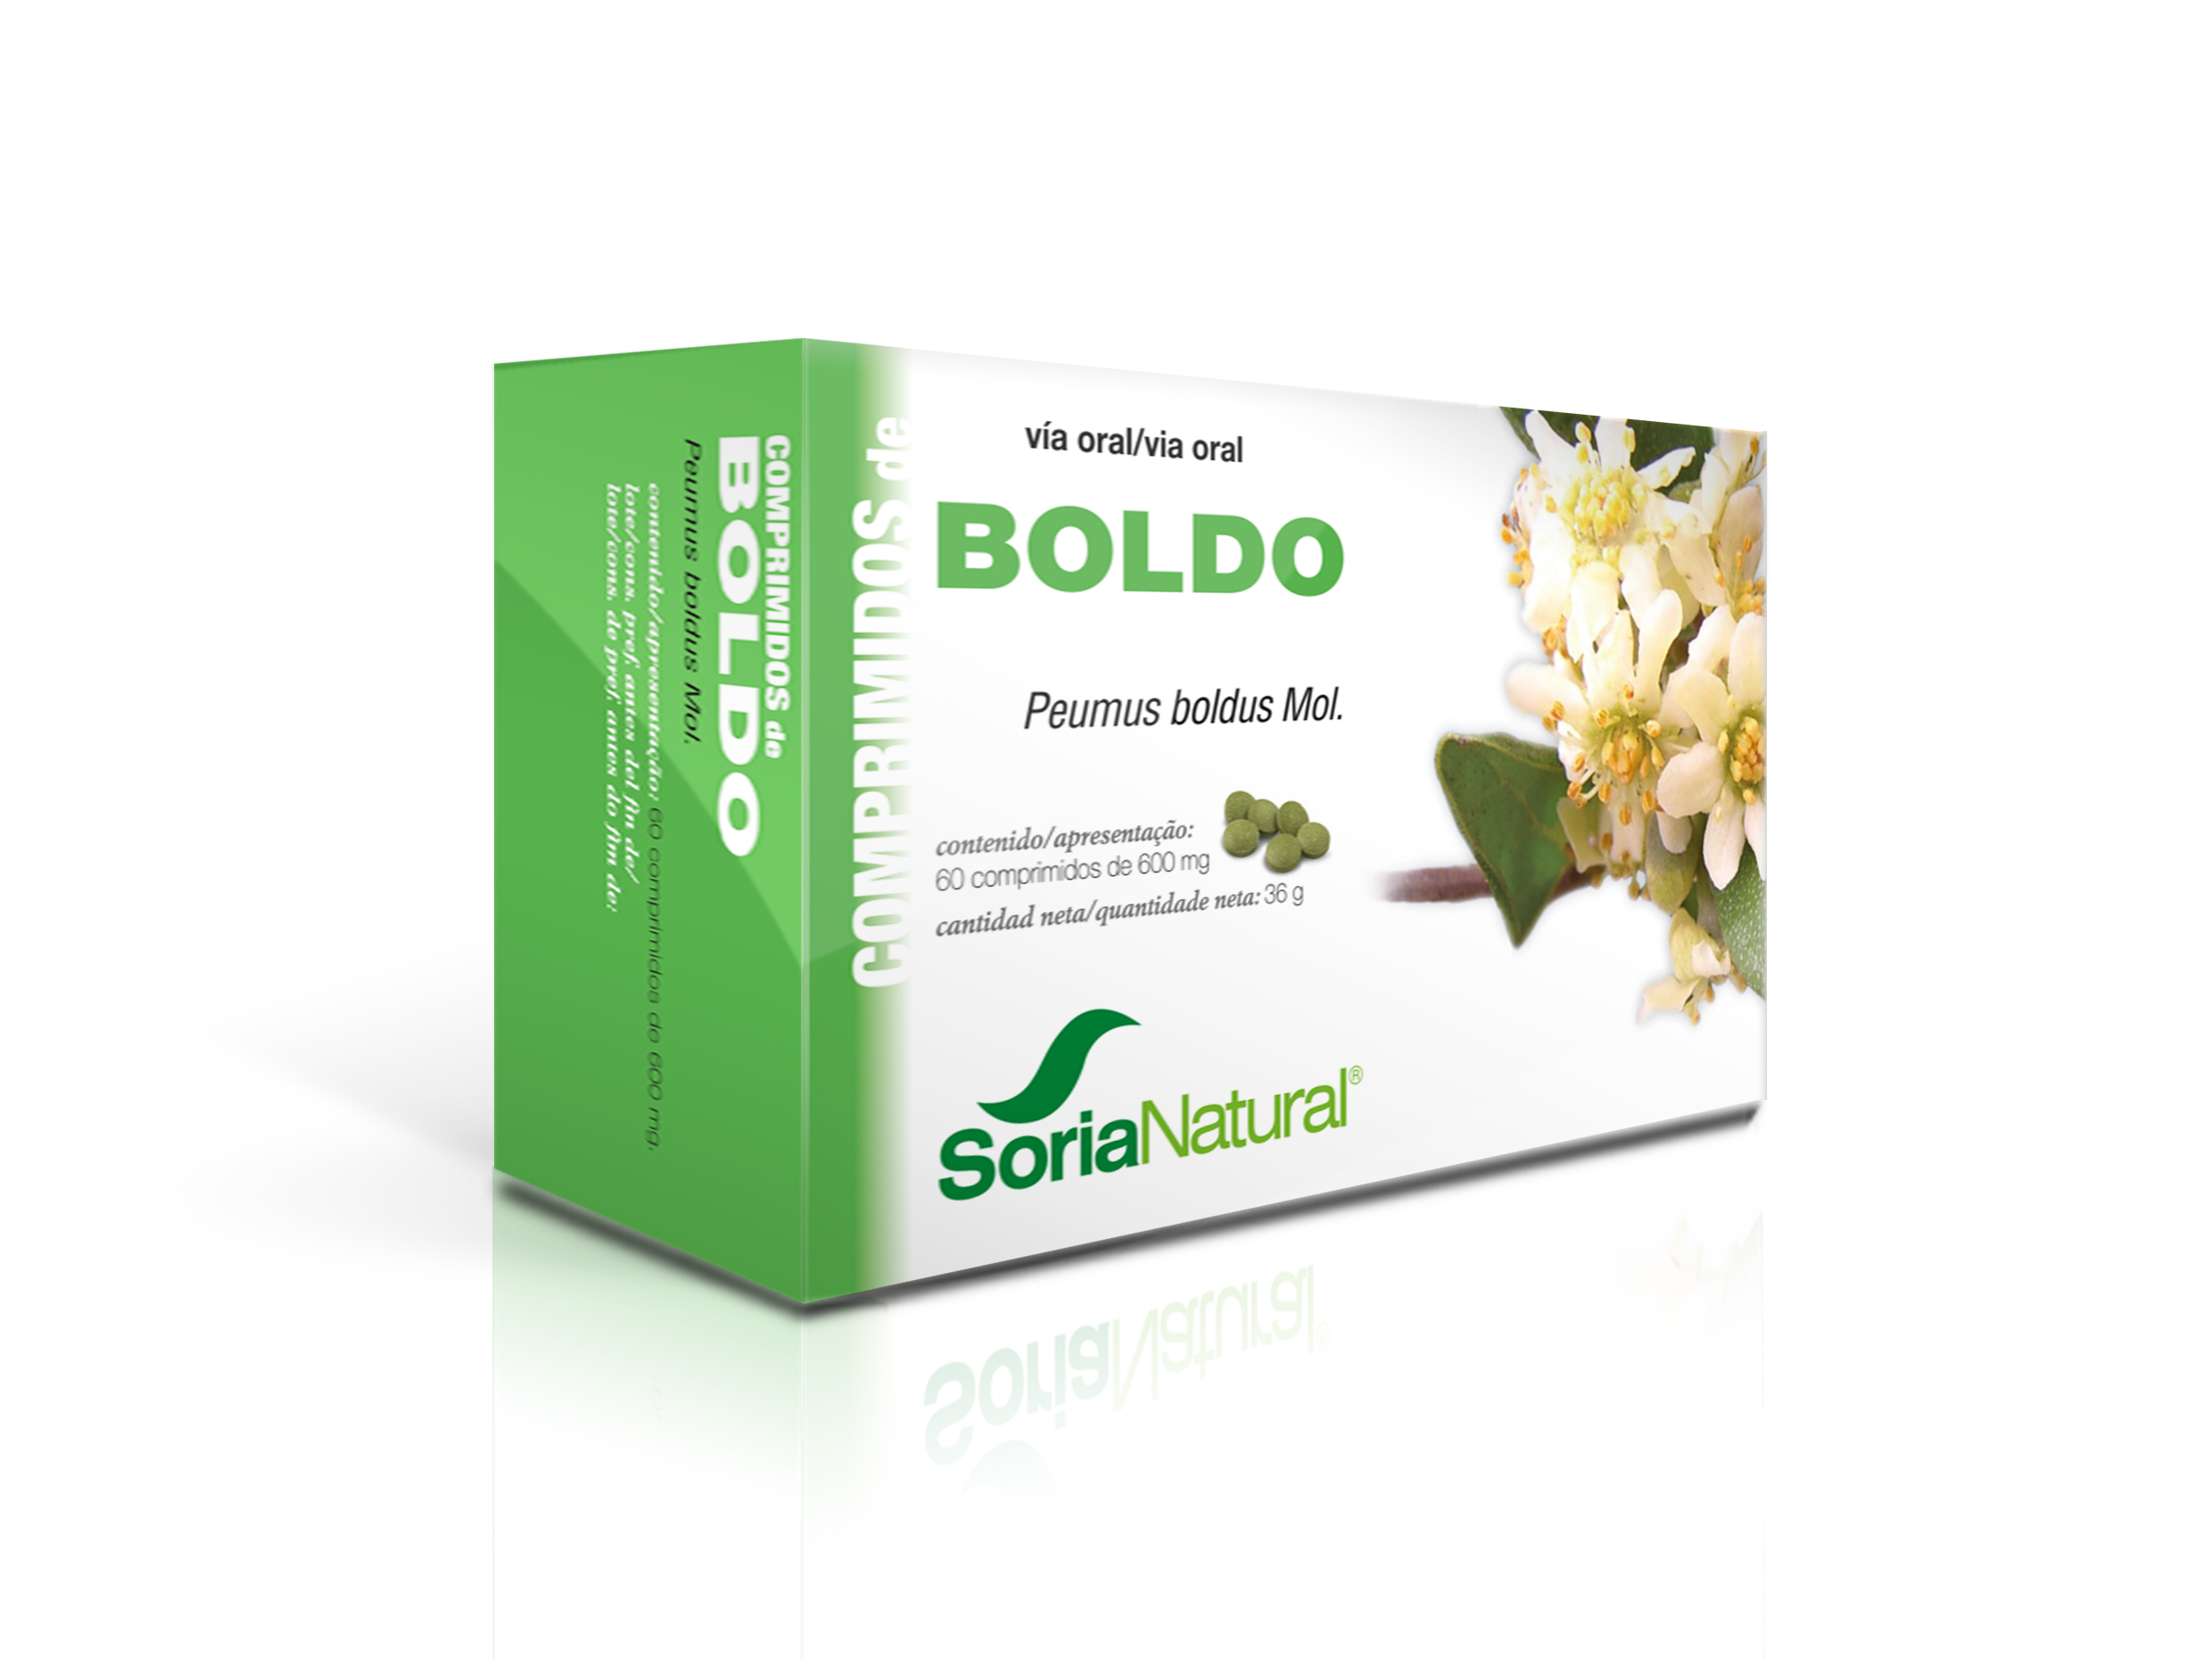 06-S Boldo: boldo 350 mg